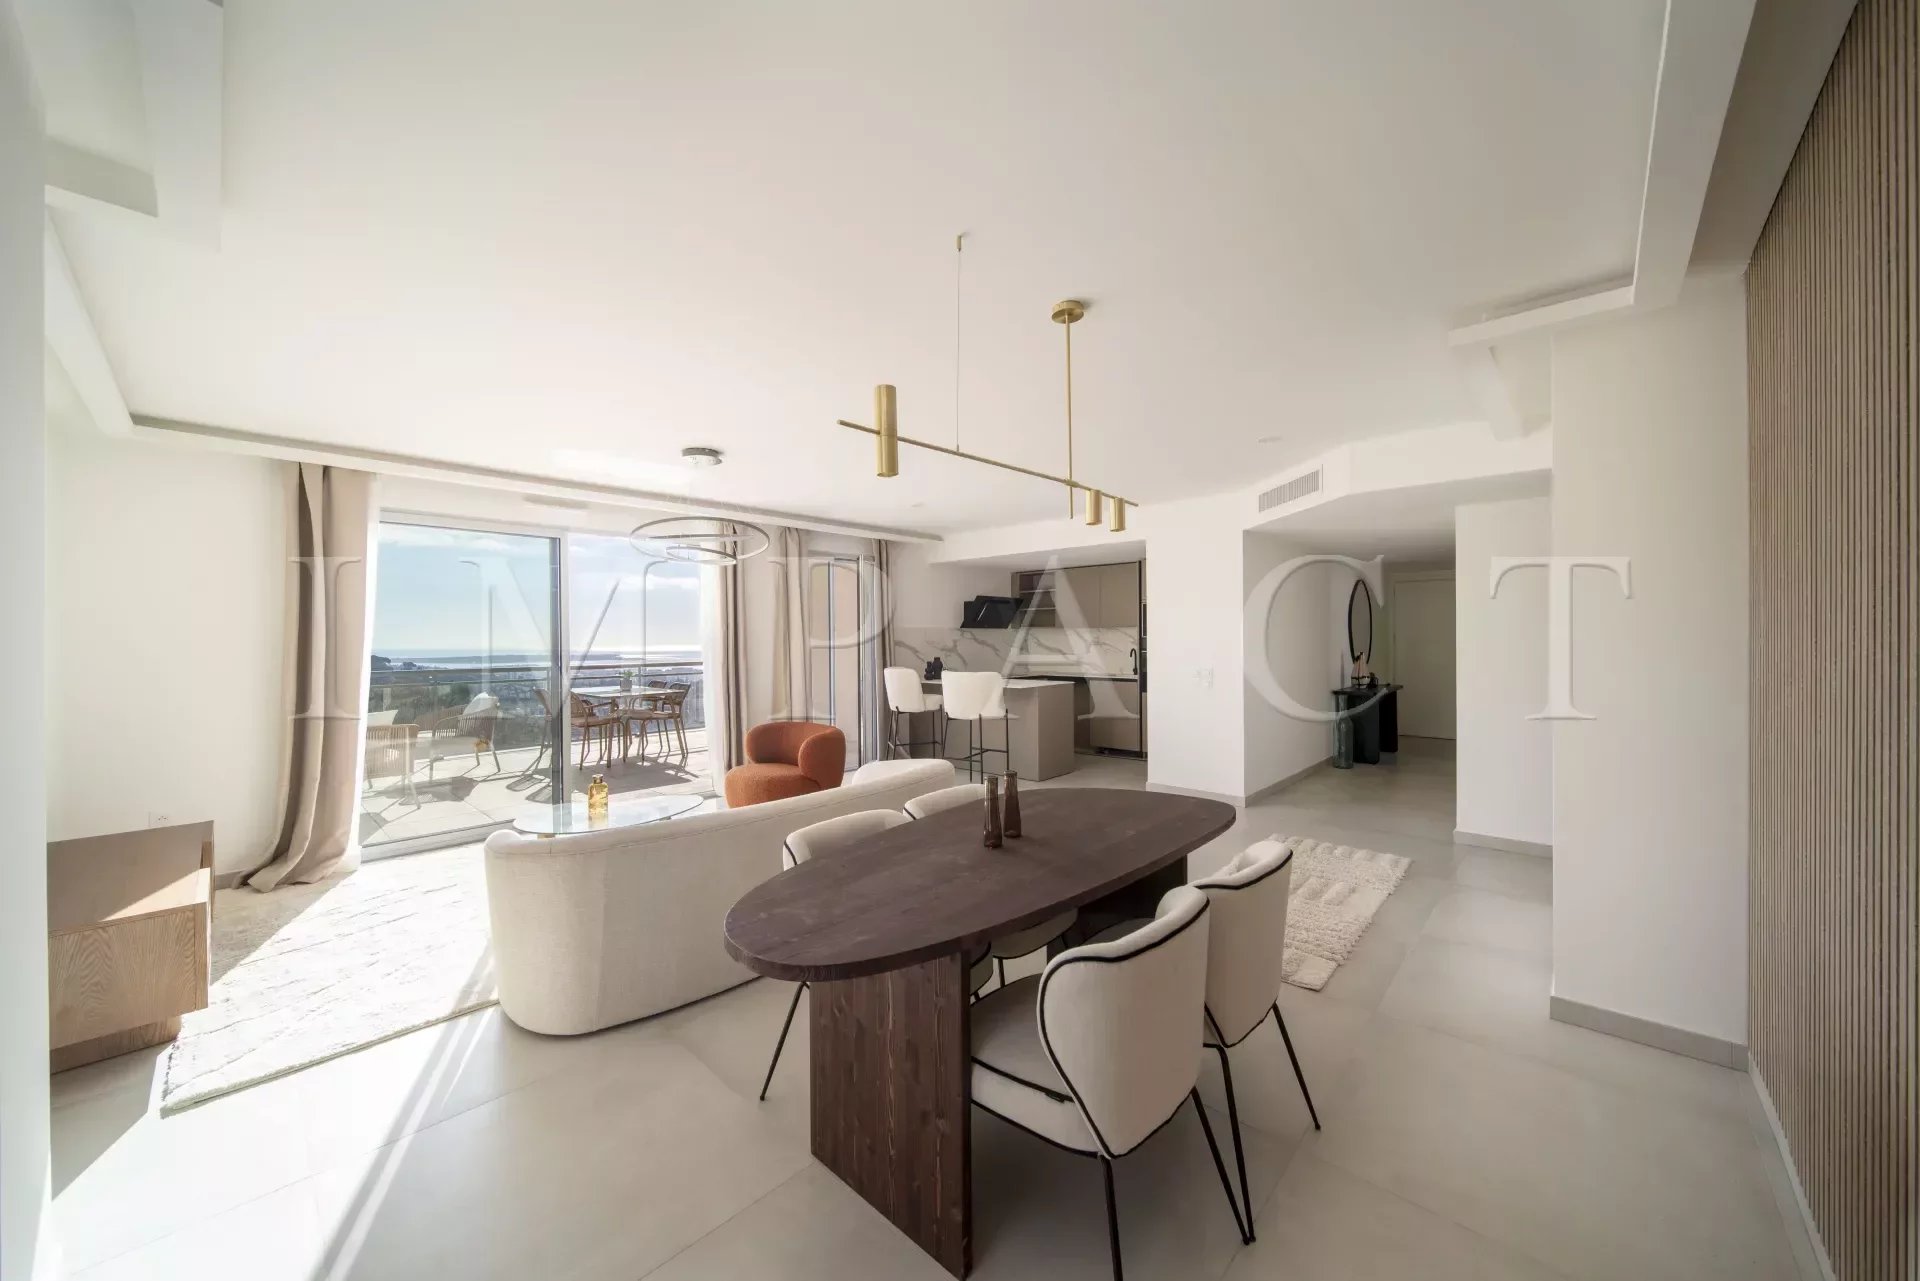 Le Cannet sea view apartment for sale 